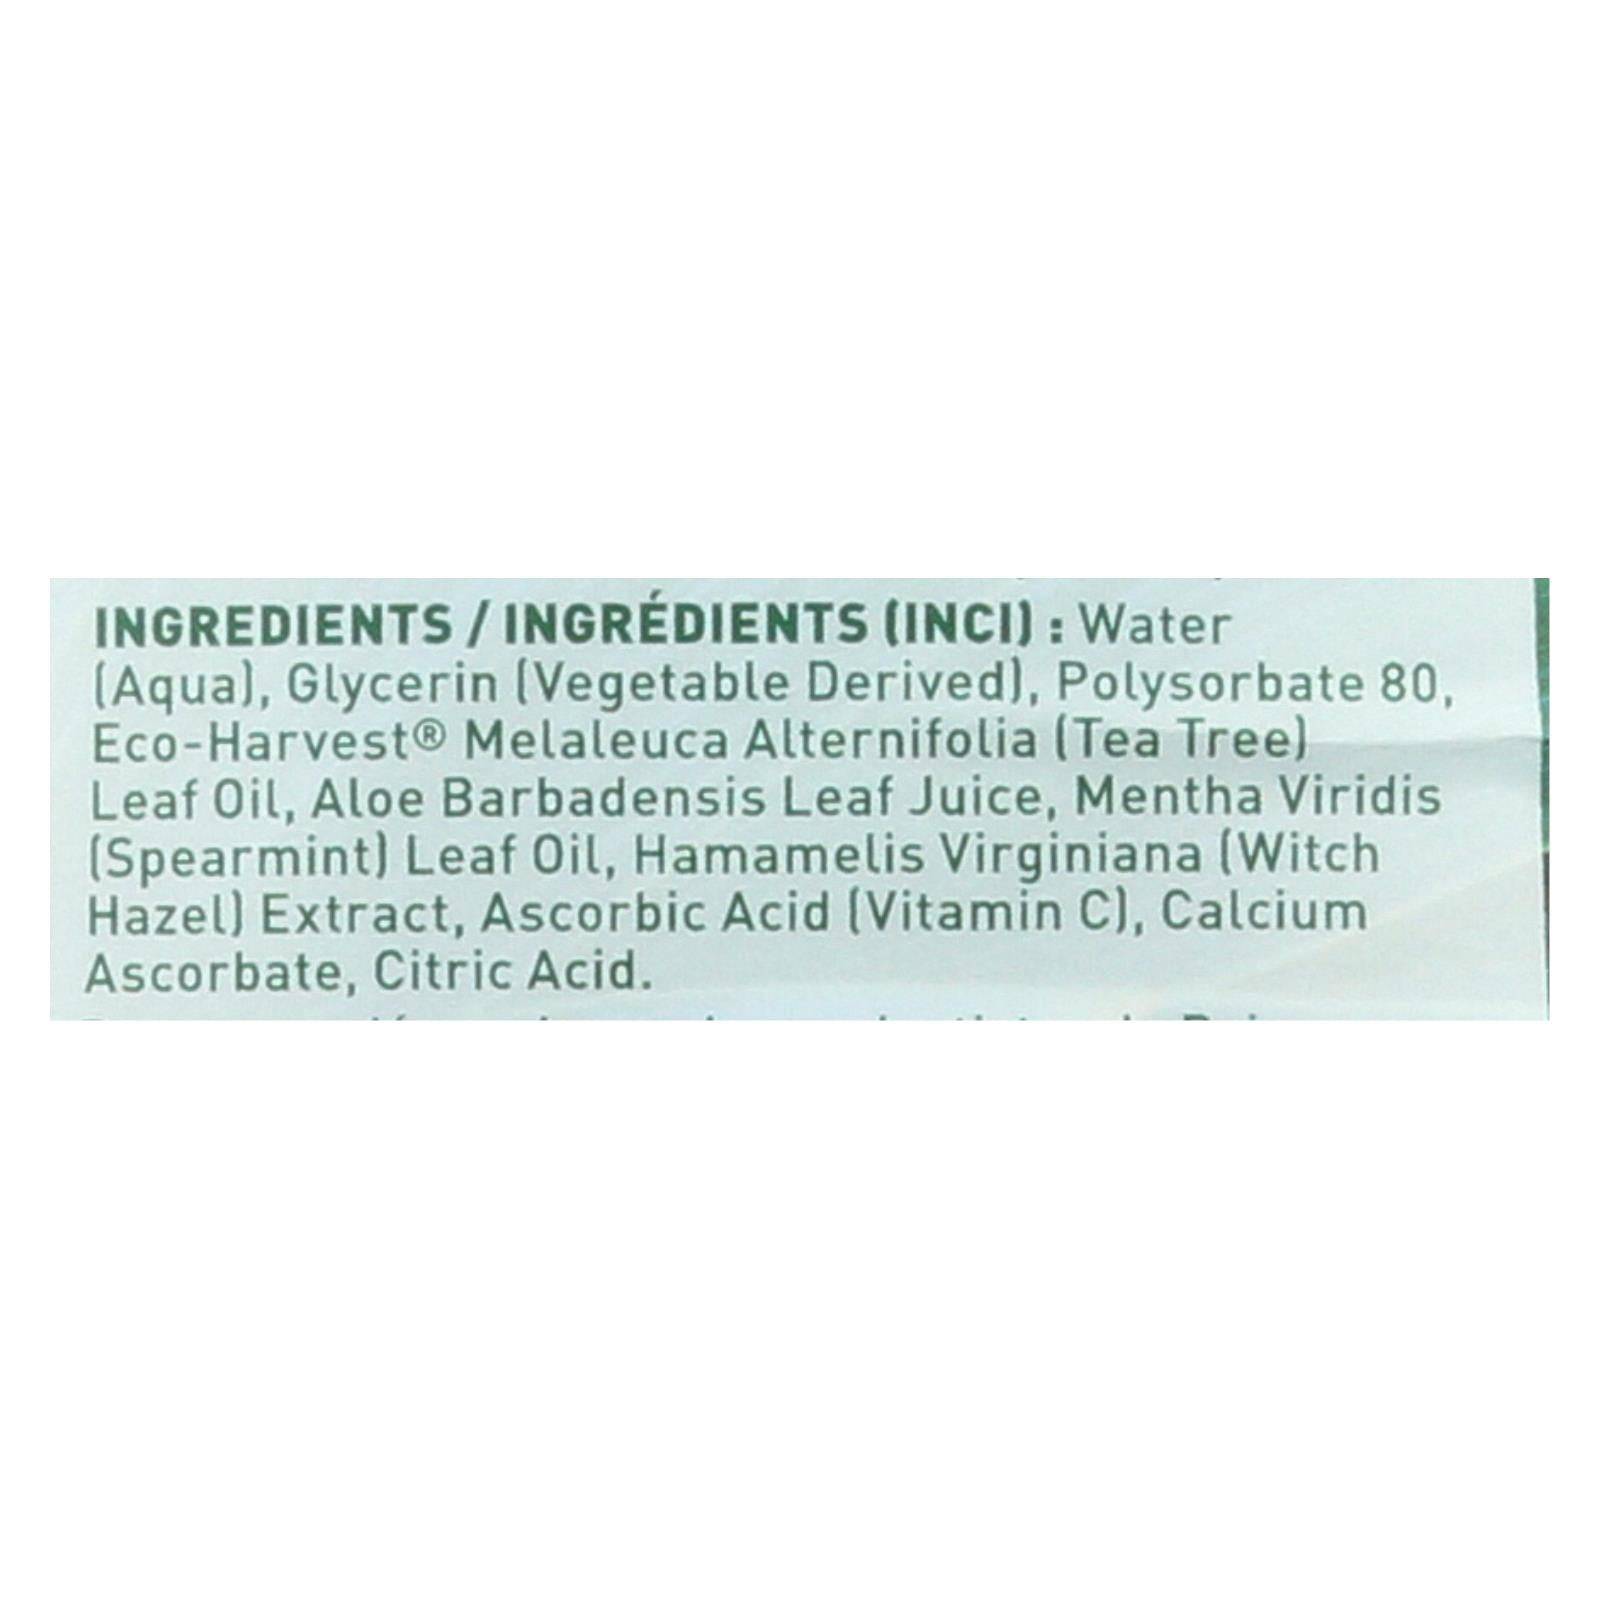 Desert Essence - Natural Refreshing Tea Tree Oil Mouthwash - 16 Fl Oz | OnlyNaturals.us